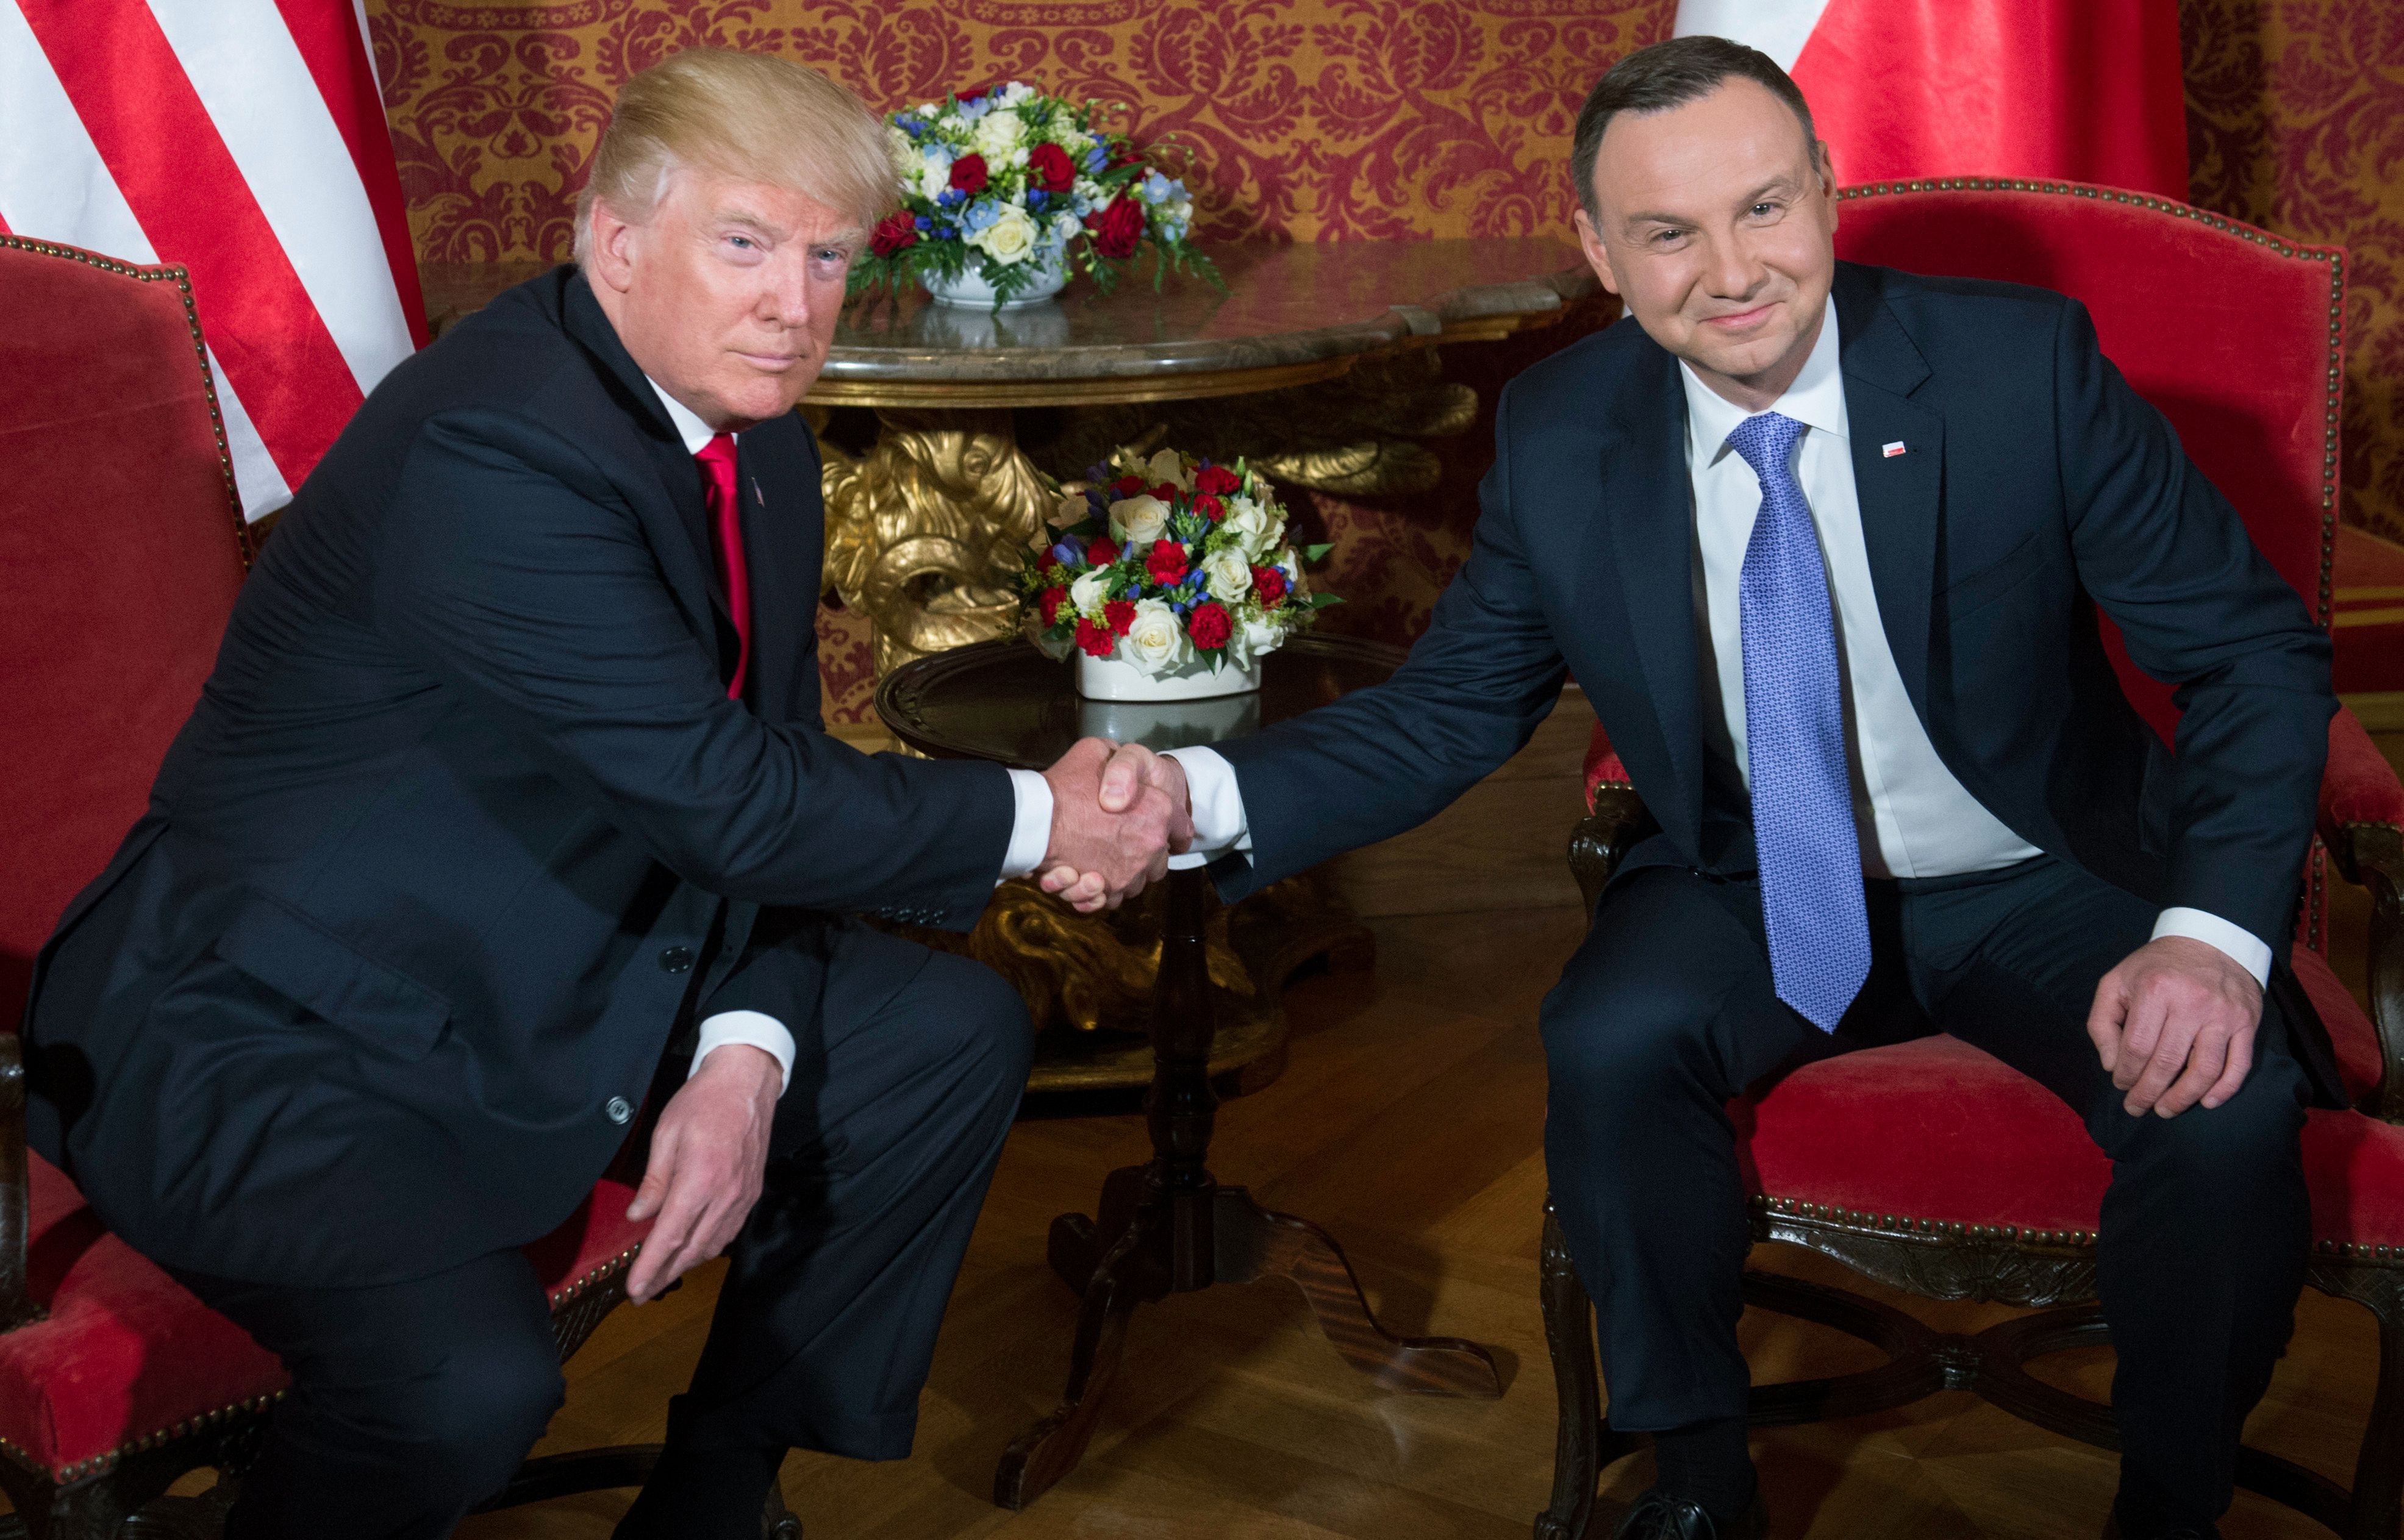 POLAND-US-TRUMP-G20